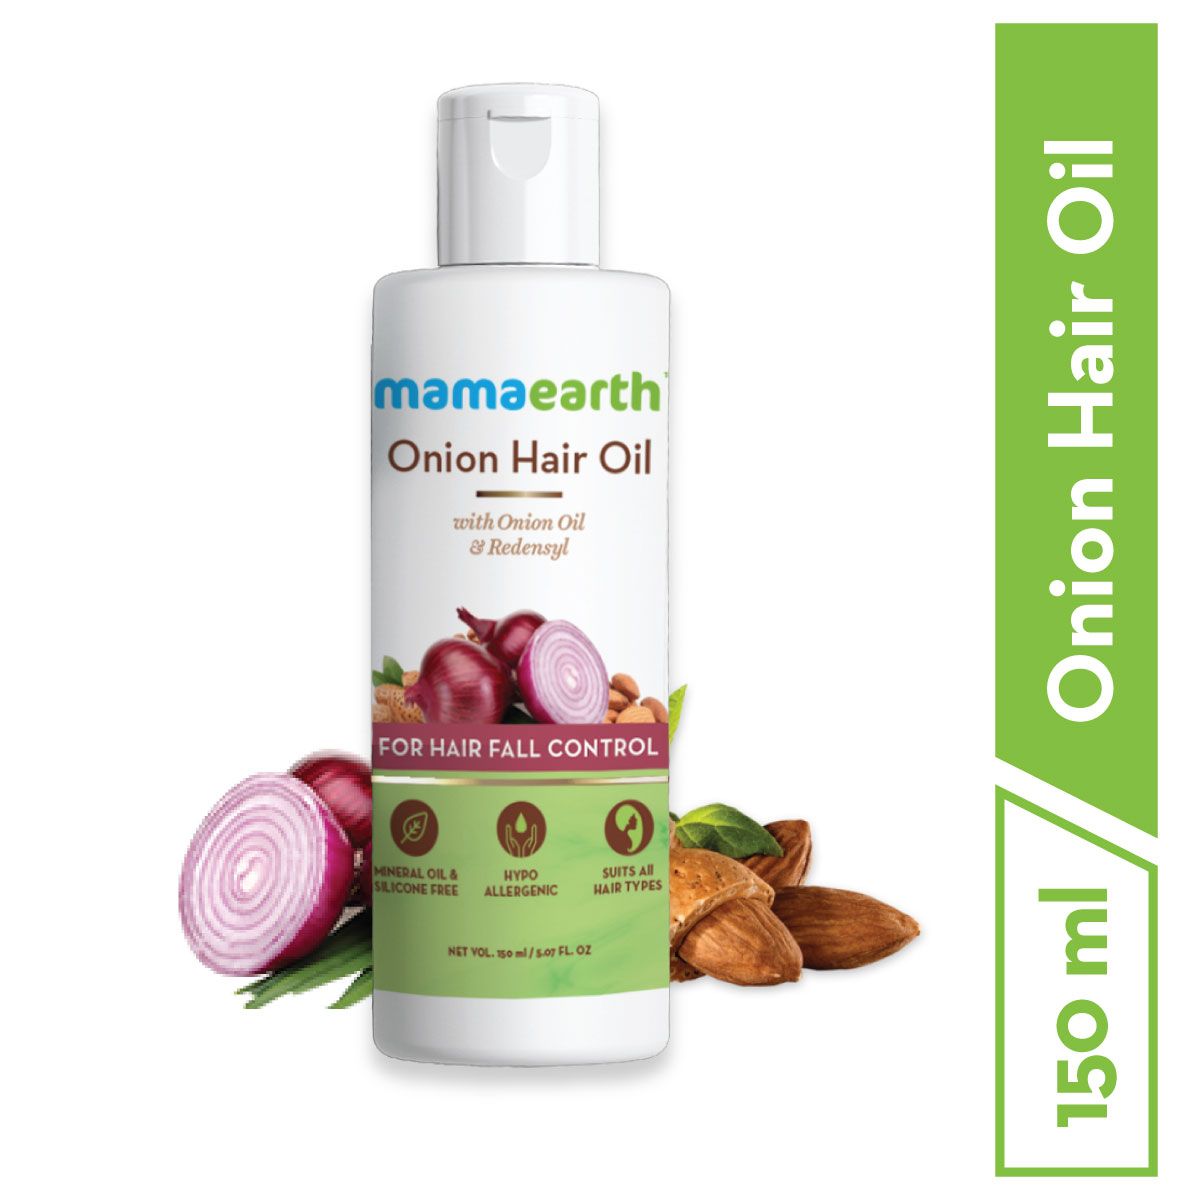 Mamaearth onion oil reduces hairfall